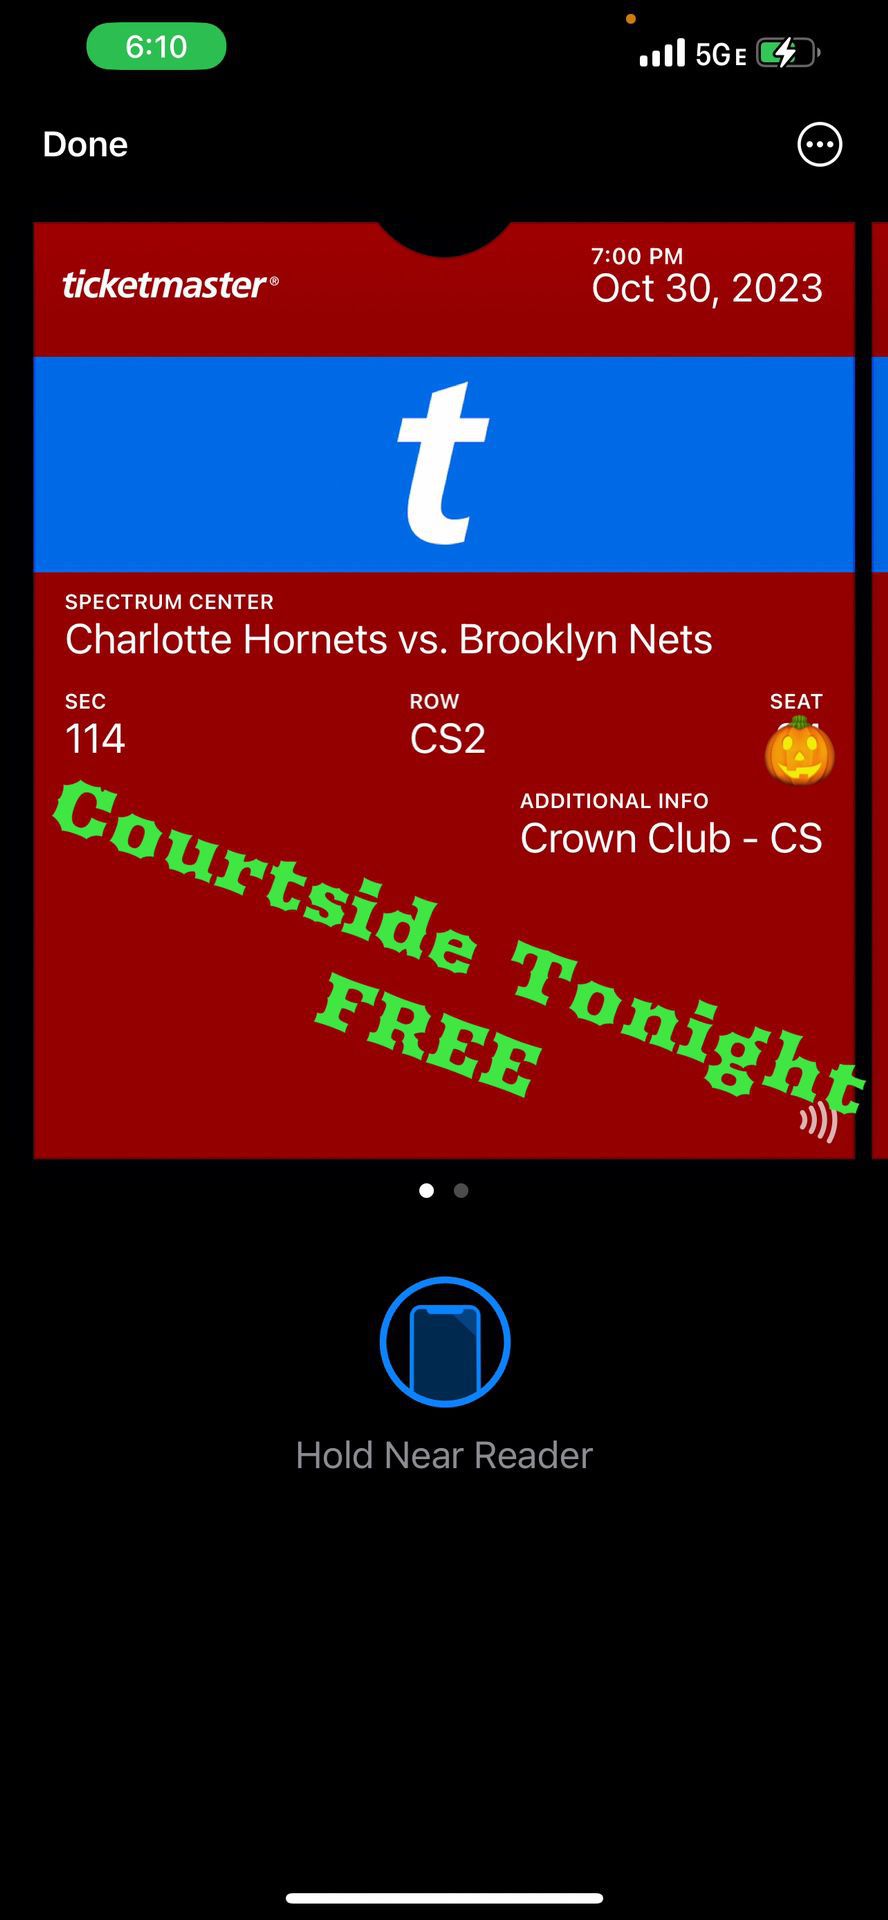 Courtside FREE Hornets Tonight Vs Nets 